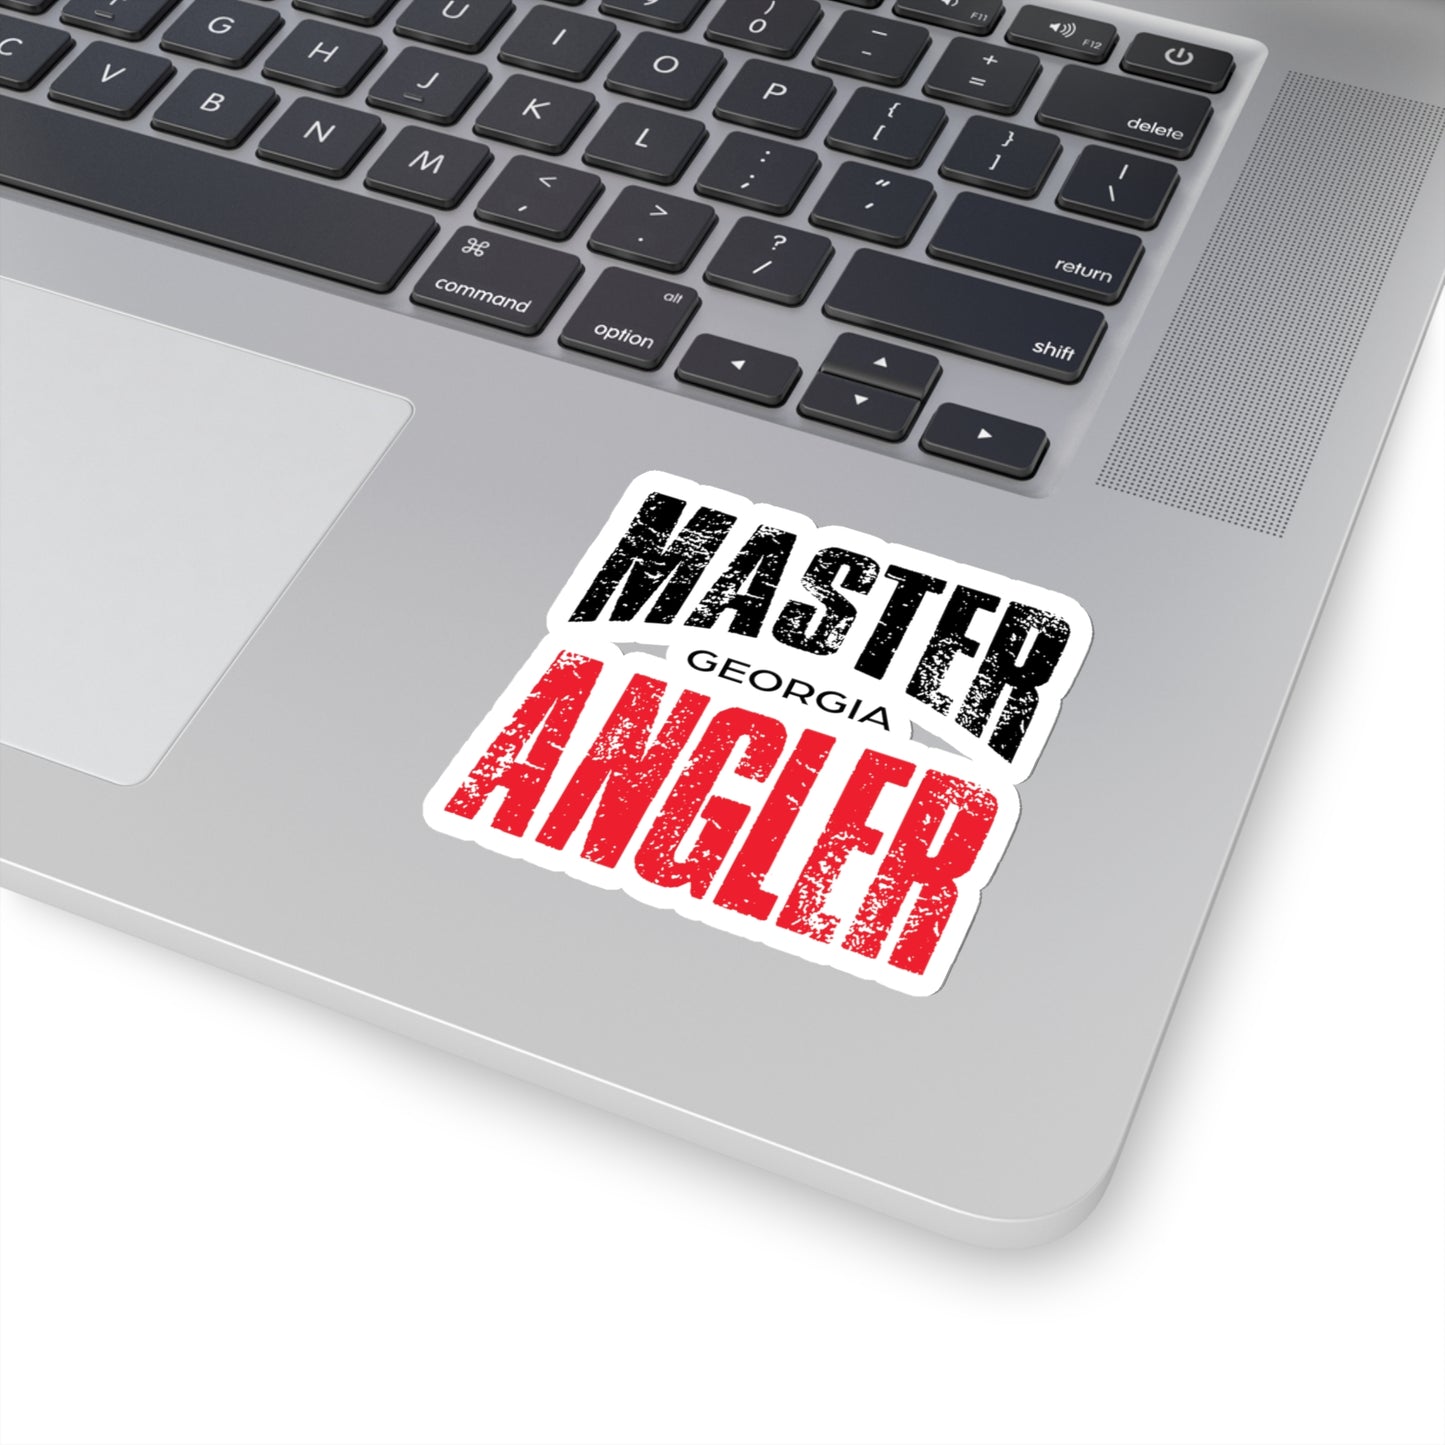 Georgia Master Angler Sticker - RED